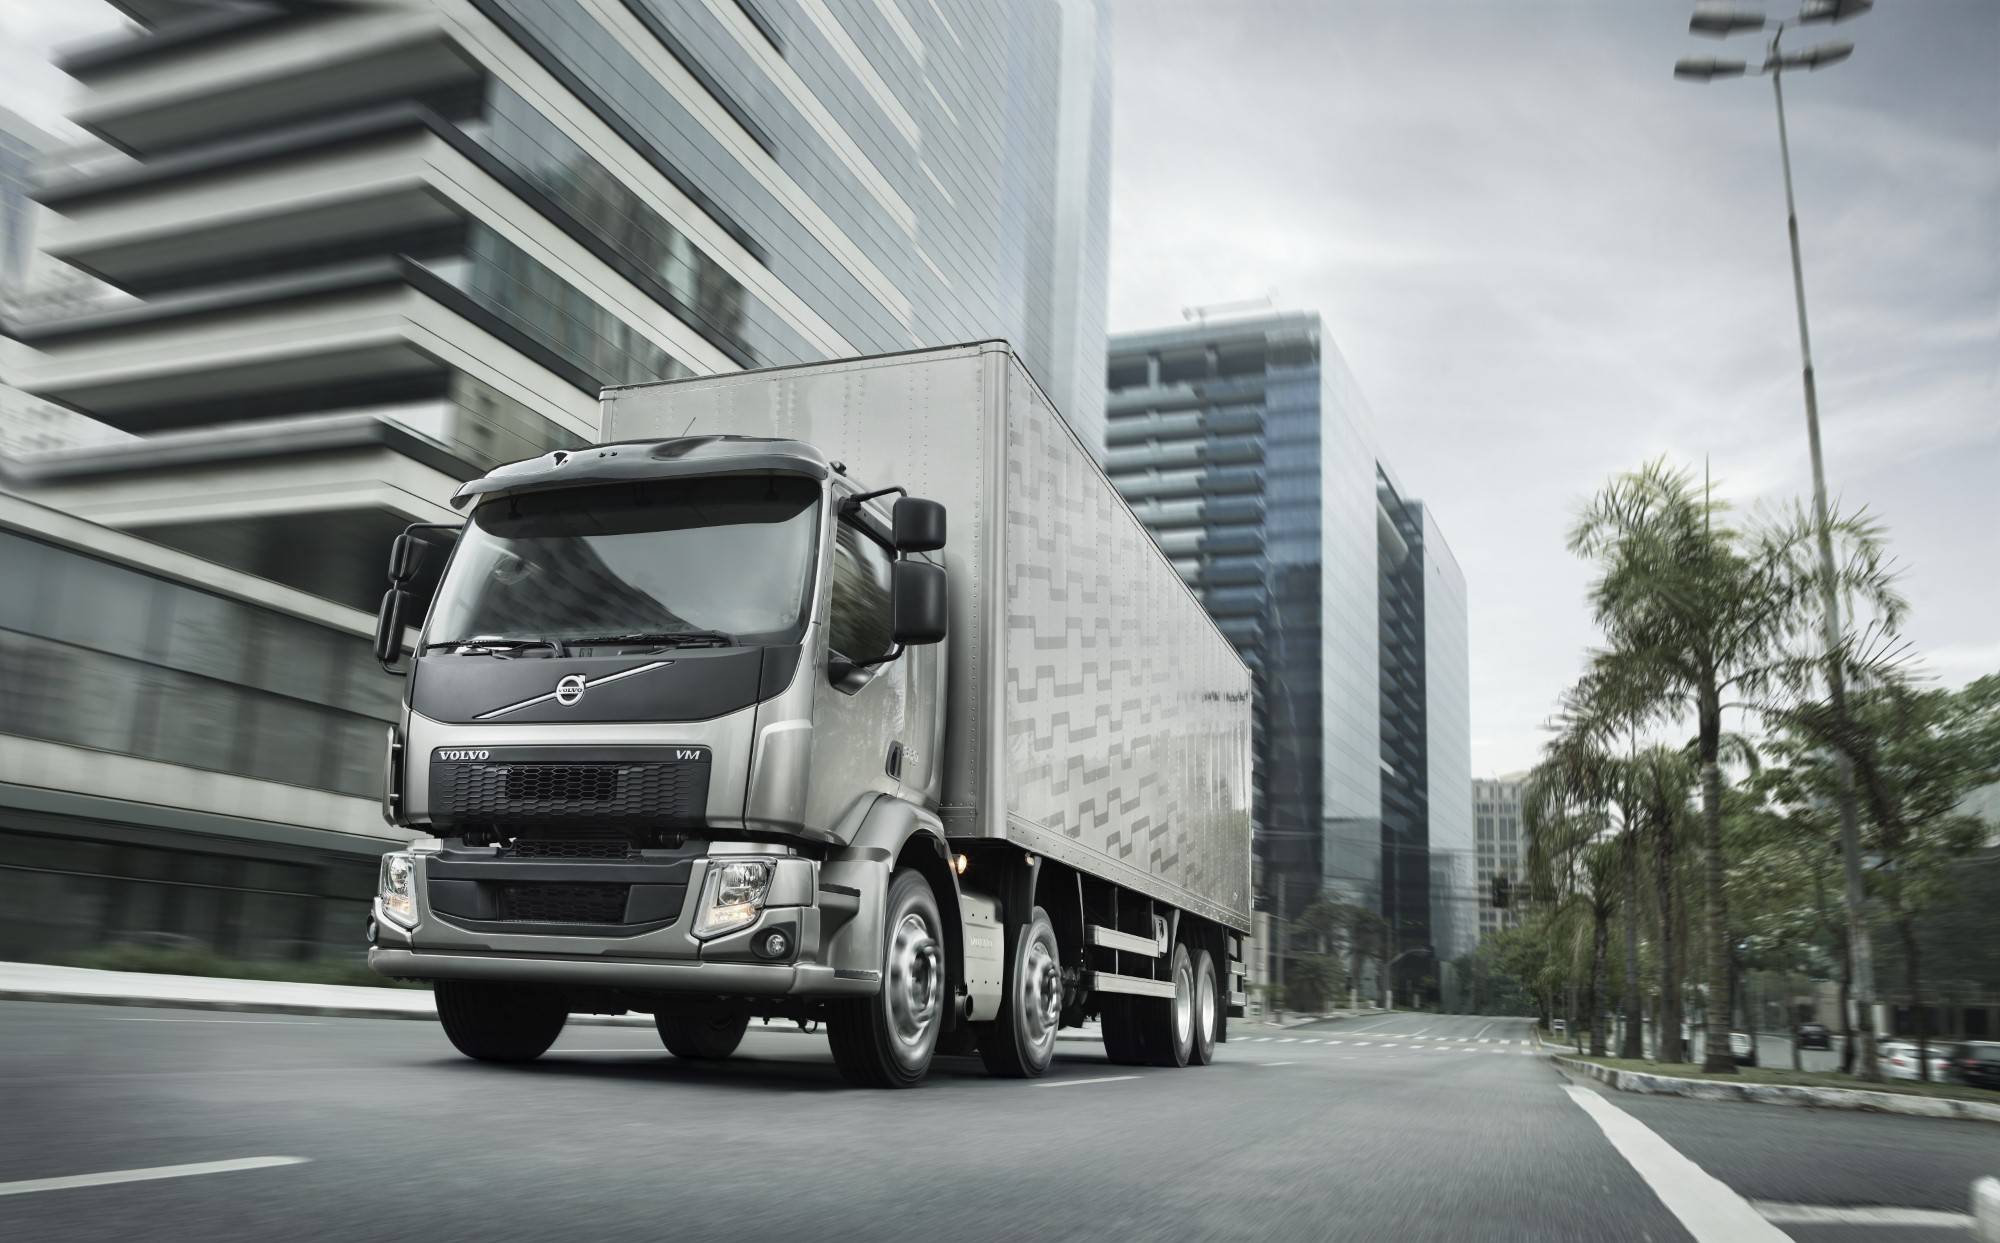 Грузовик 1000 кг. Volvo грузовик 2023. Новый грузовик Вольво в 2023. Volvo грузовой машина 2020. Volvo тягач 2020.